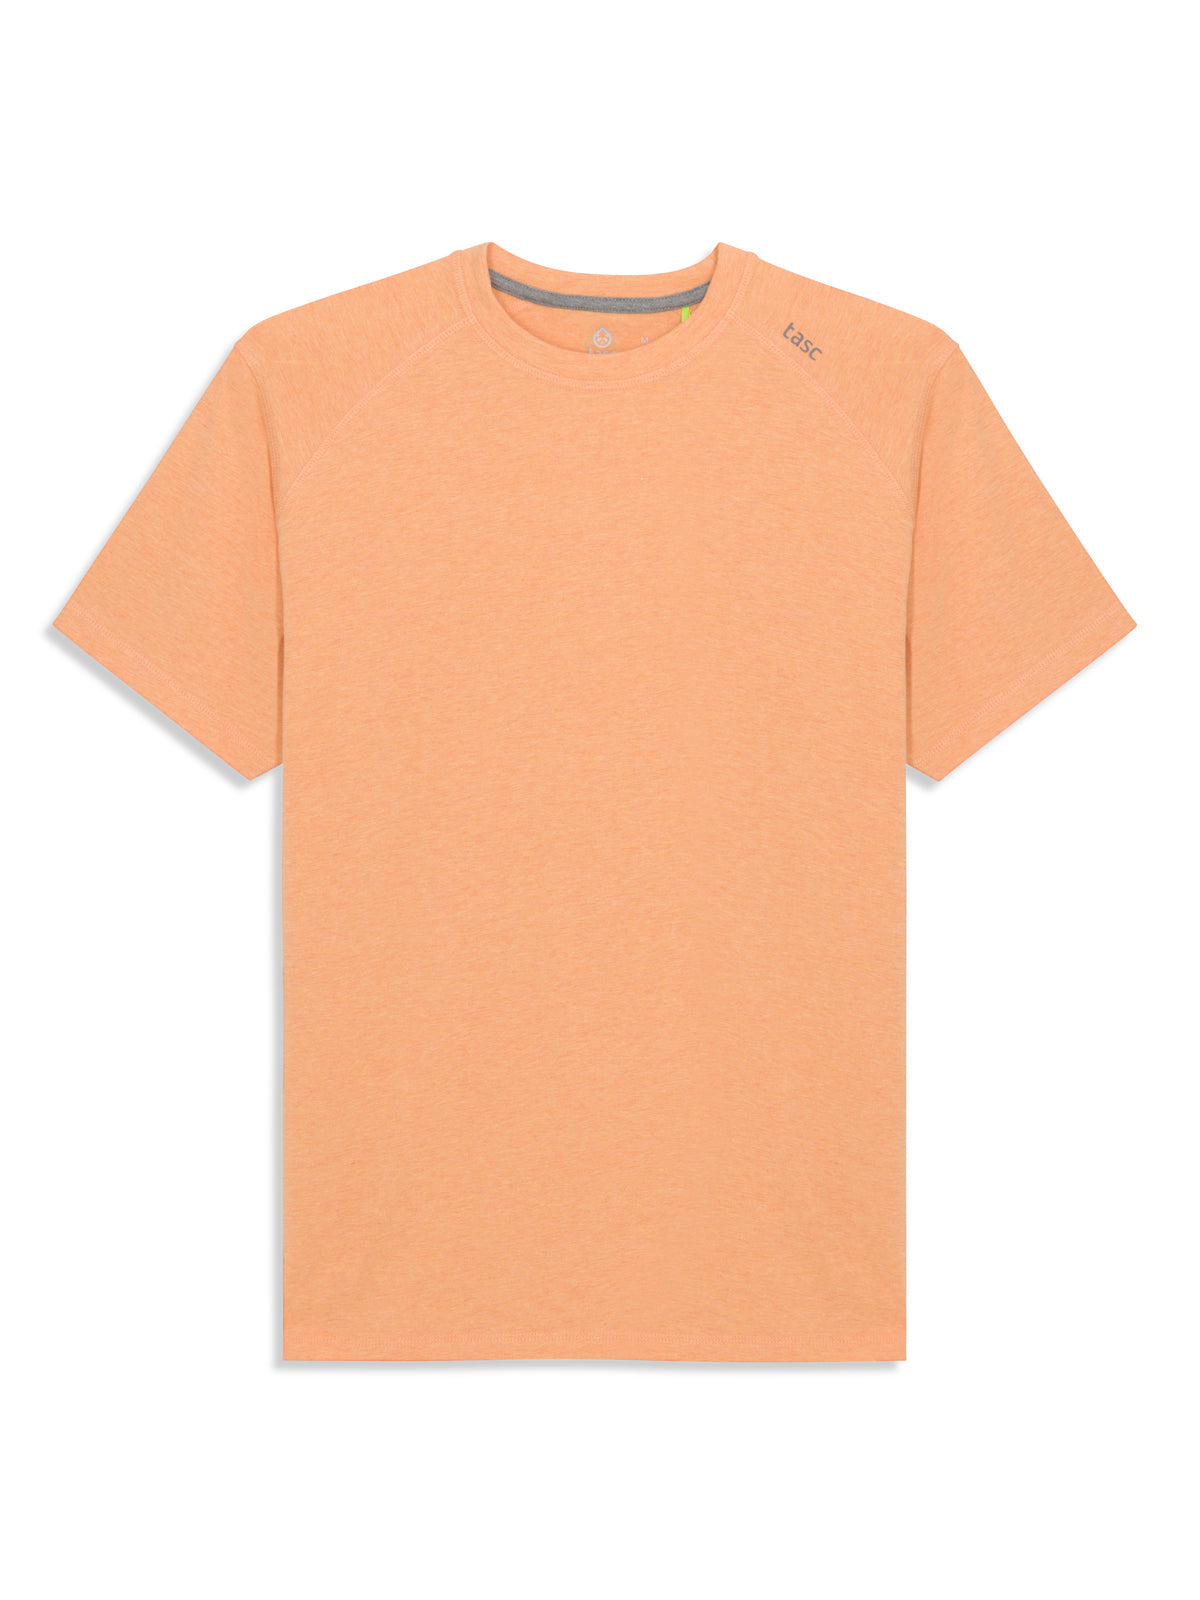 Tasc Men's Carrollton Fitness T-Shirt Apparel Tasc Apricot Crush Heather-853 Small 